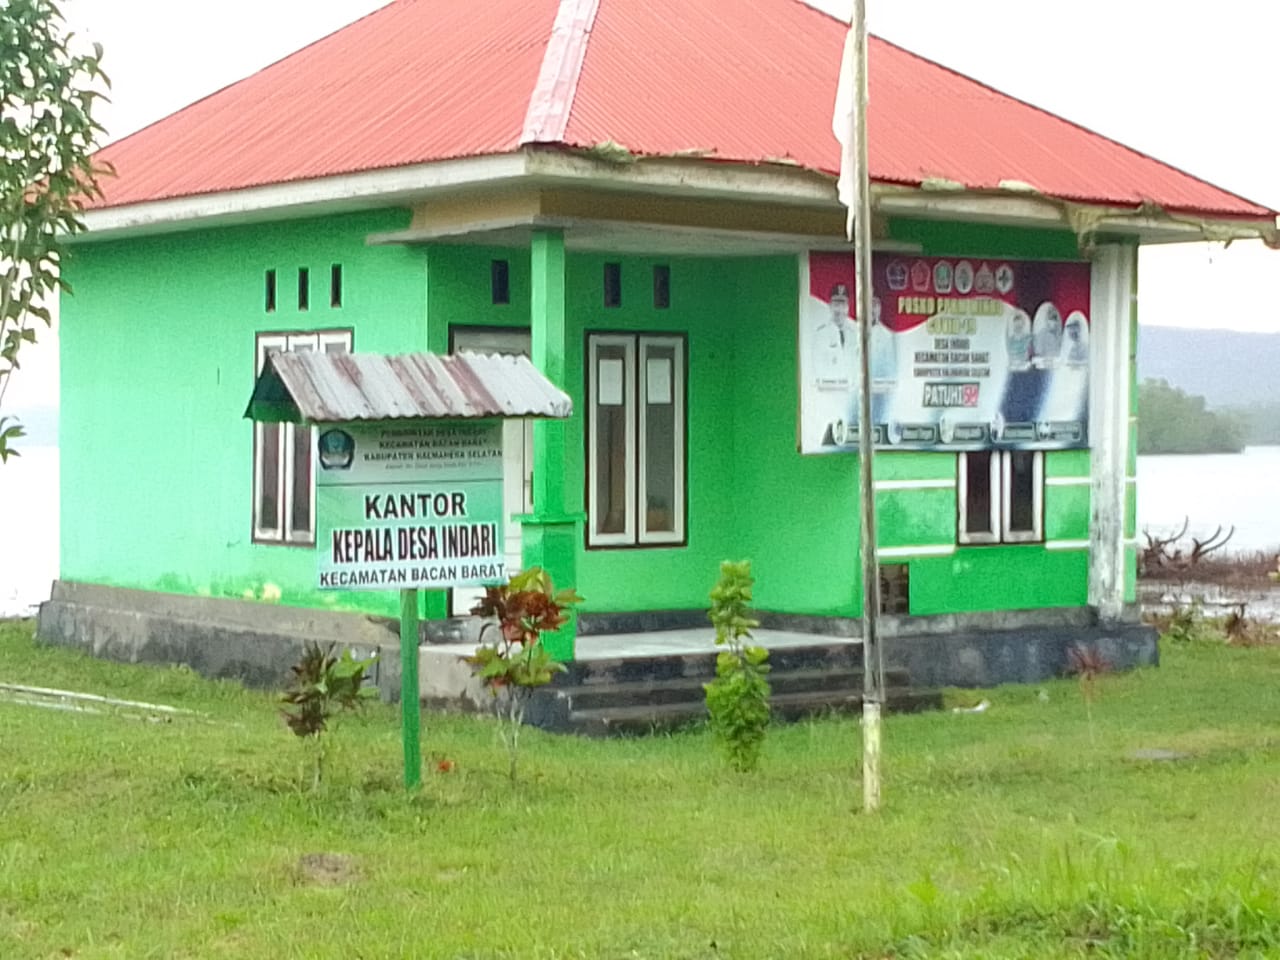 Kantor Desa Indari, Kecamatan Bacan Barat, Kabupaten Halmahera Selatan.